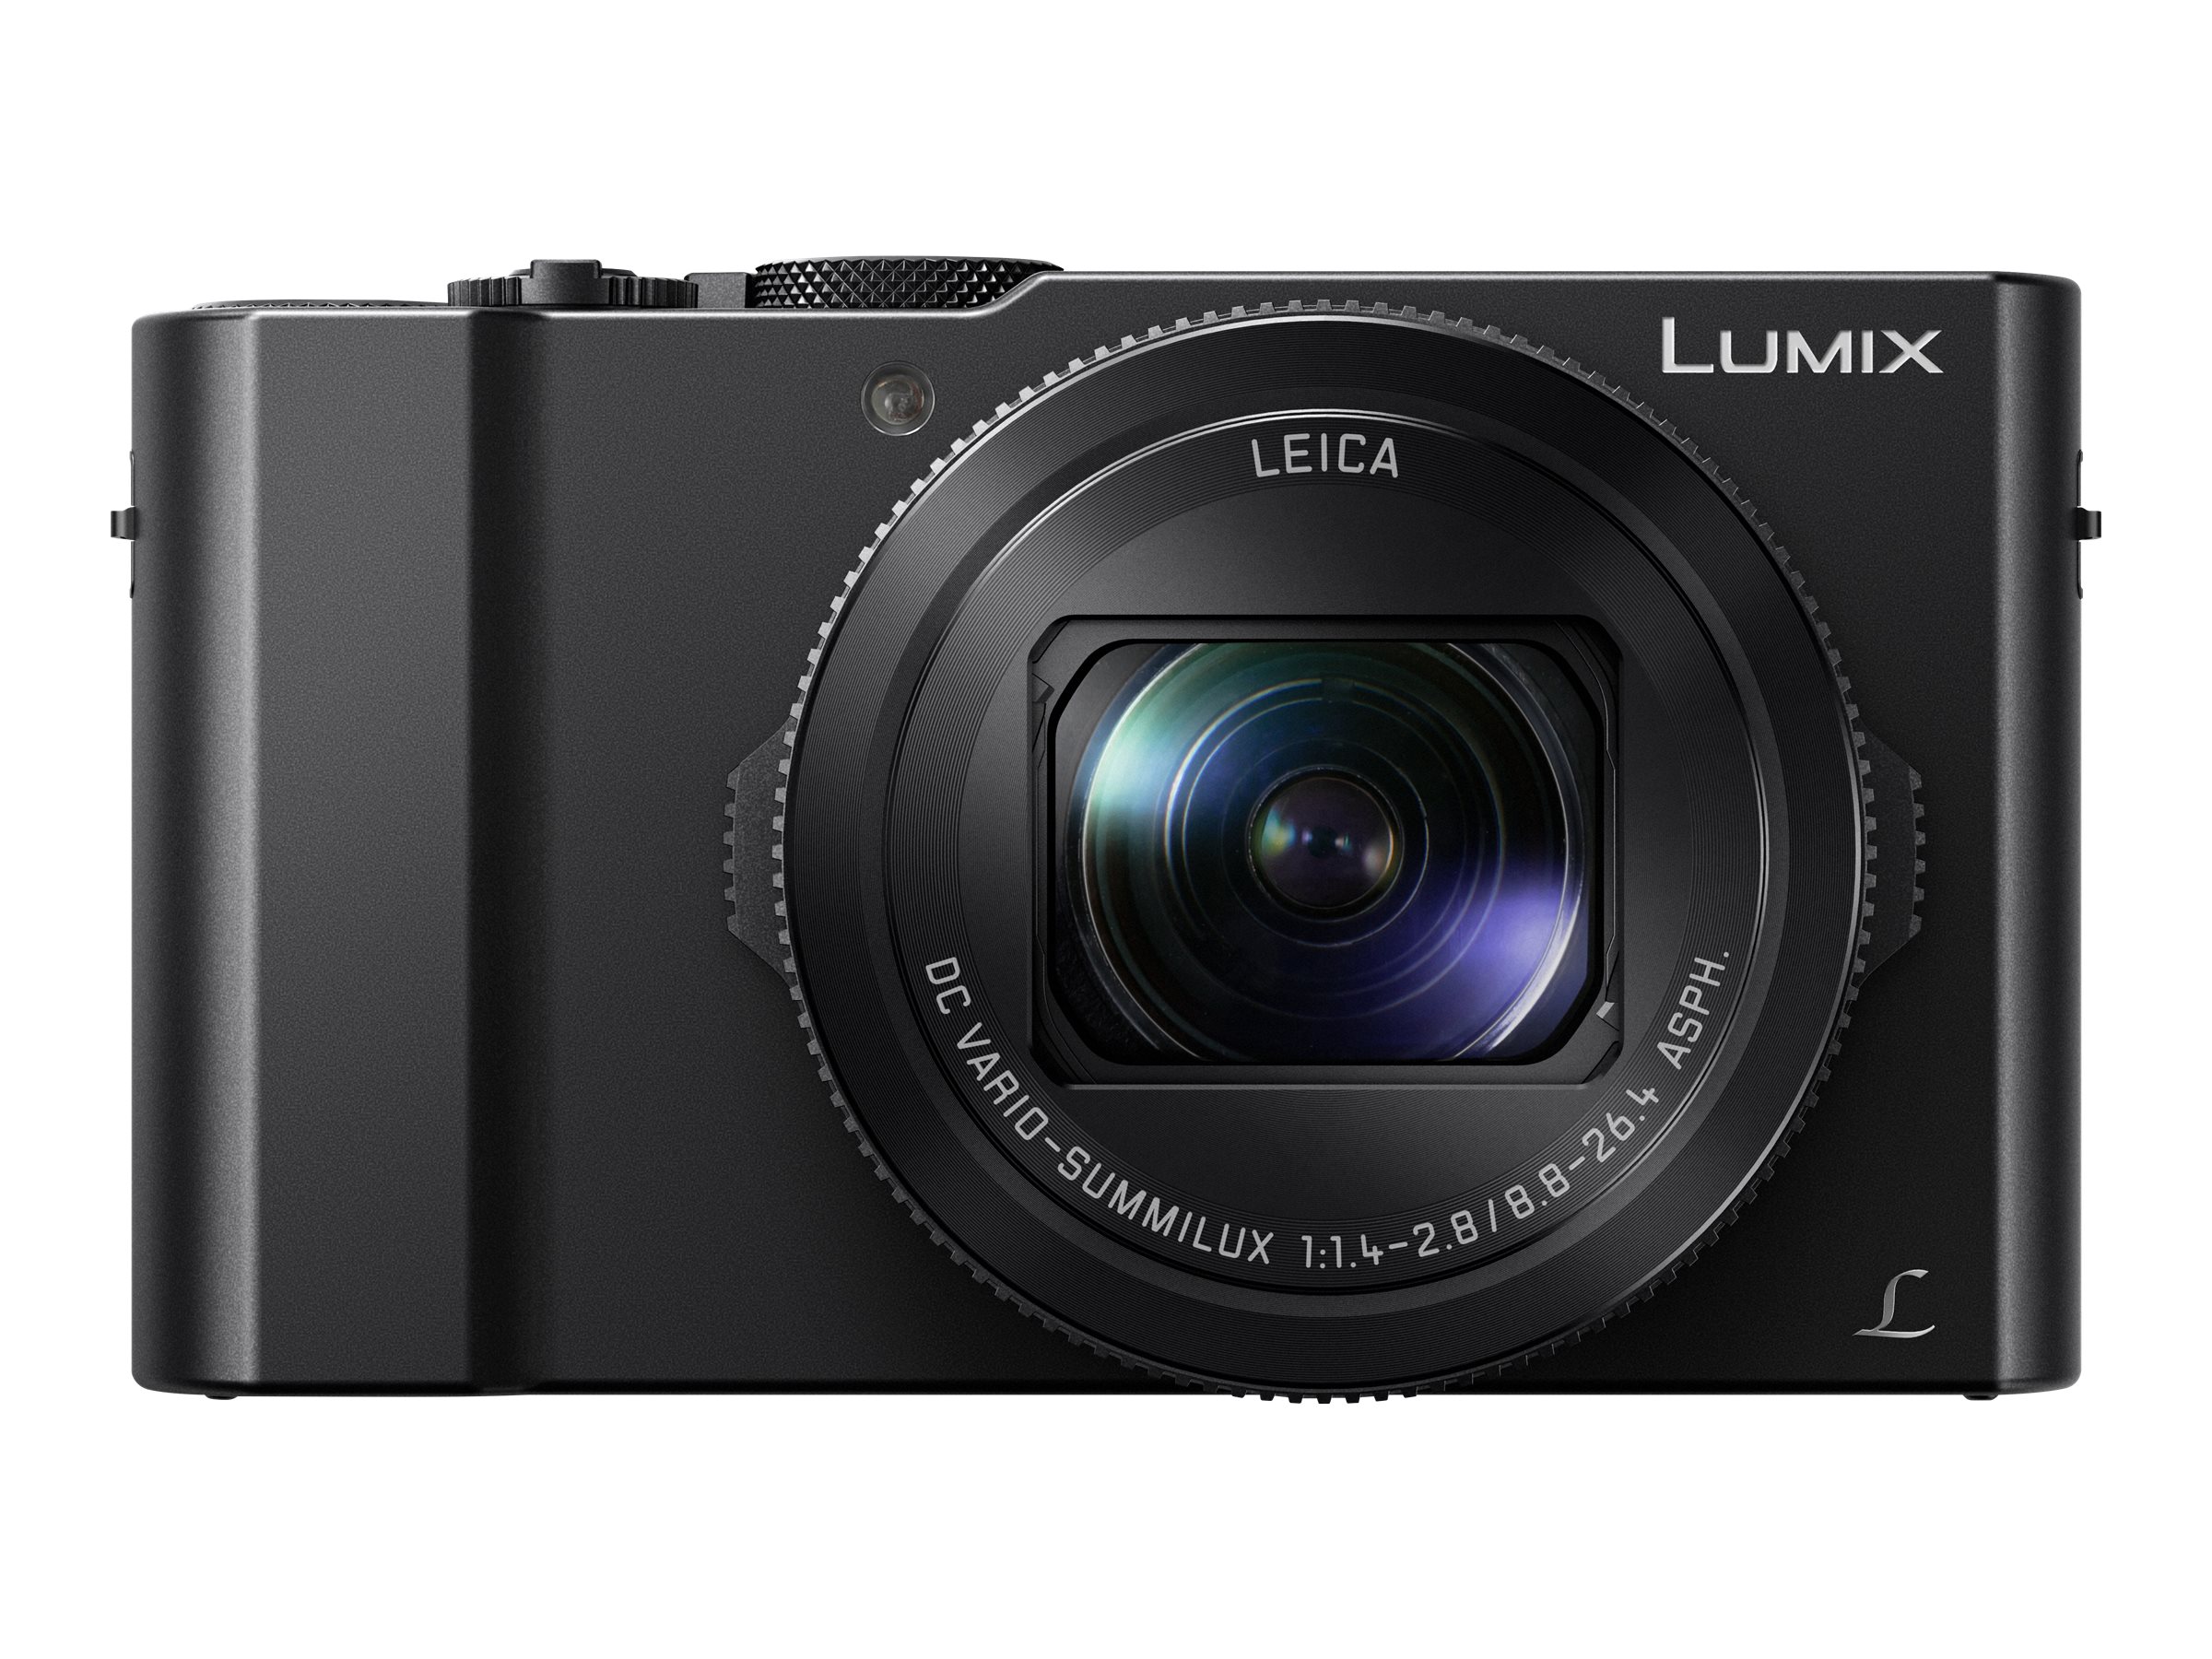 Panasonic Lumix DMC-LX10 - Digital camera - compact - 20.1 MP - 4K / 30 fps - 3x optical zoom - Leica - Wi-Fi - black - image 2 of 6